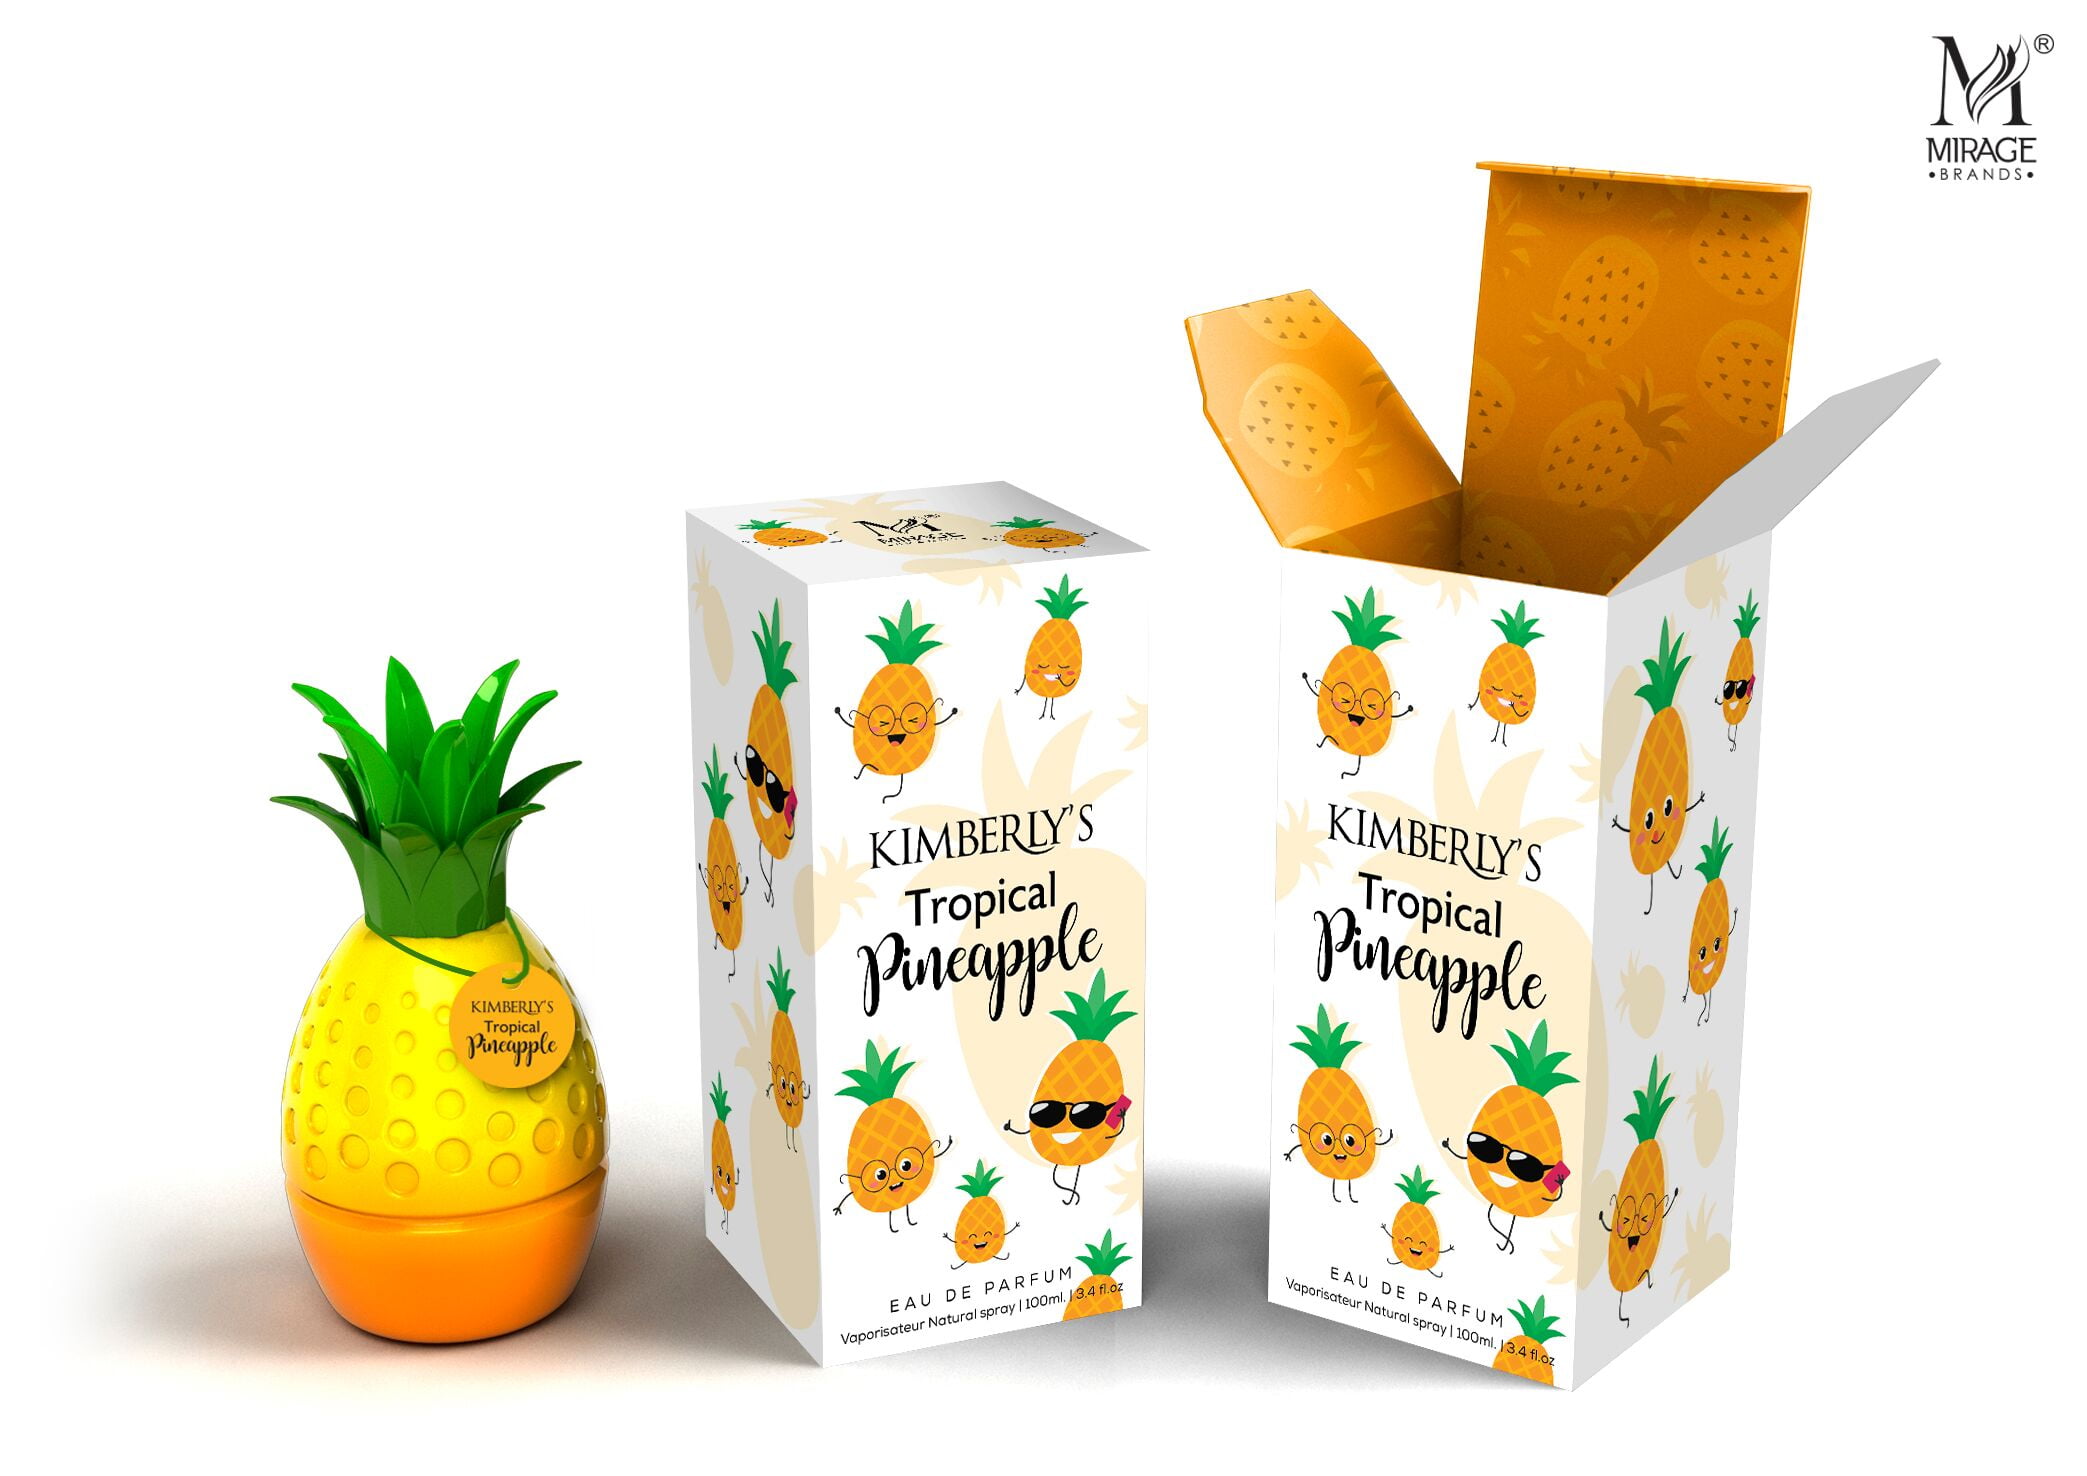 Kimberly Tropical Pineapple designer perfume 3.4 oz spray